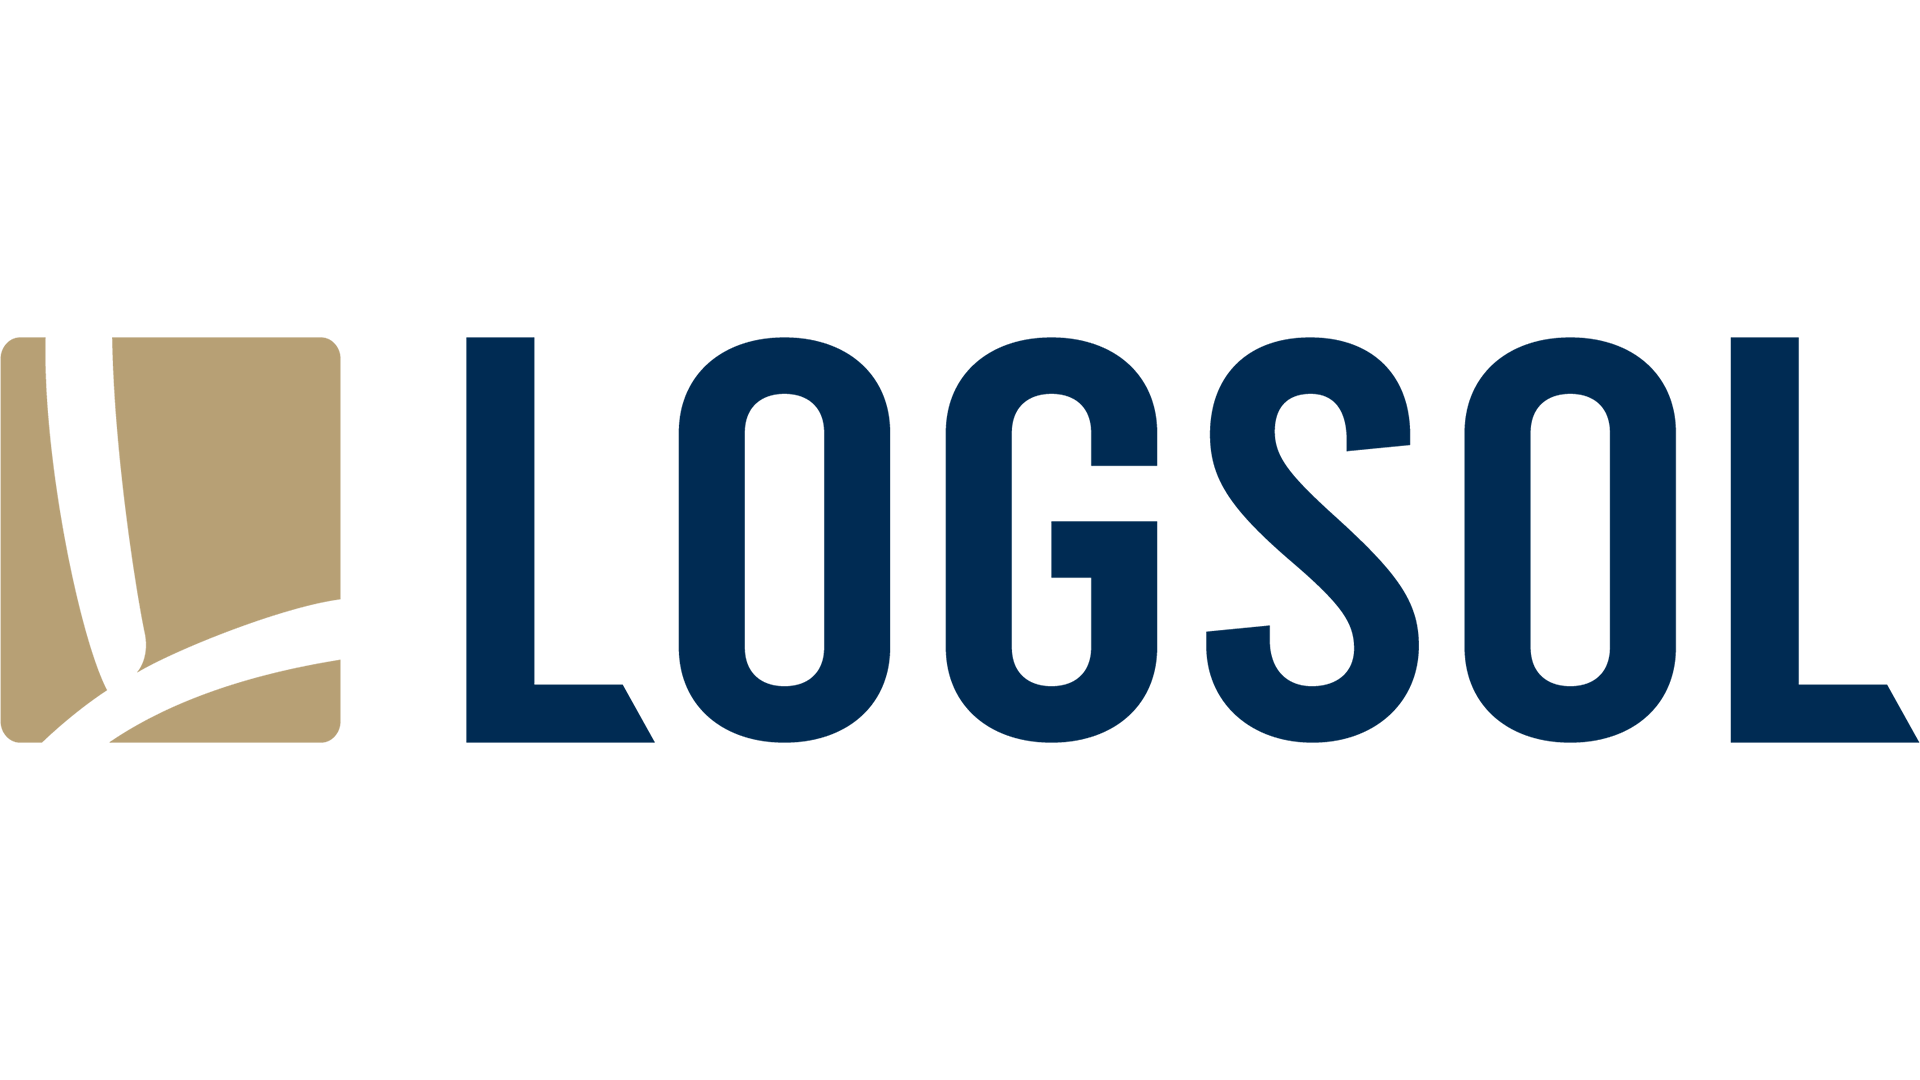 Logsol GmbH